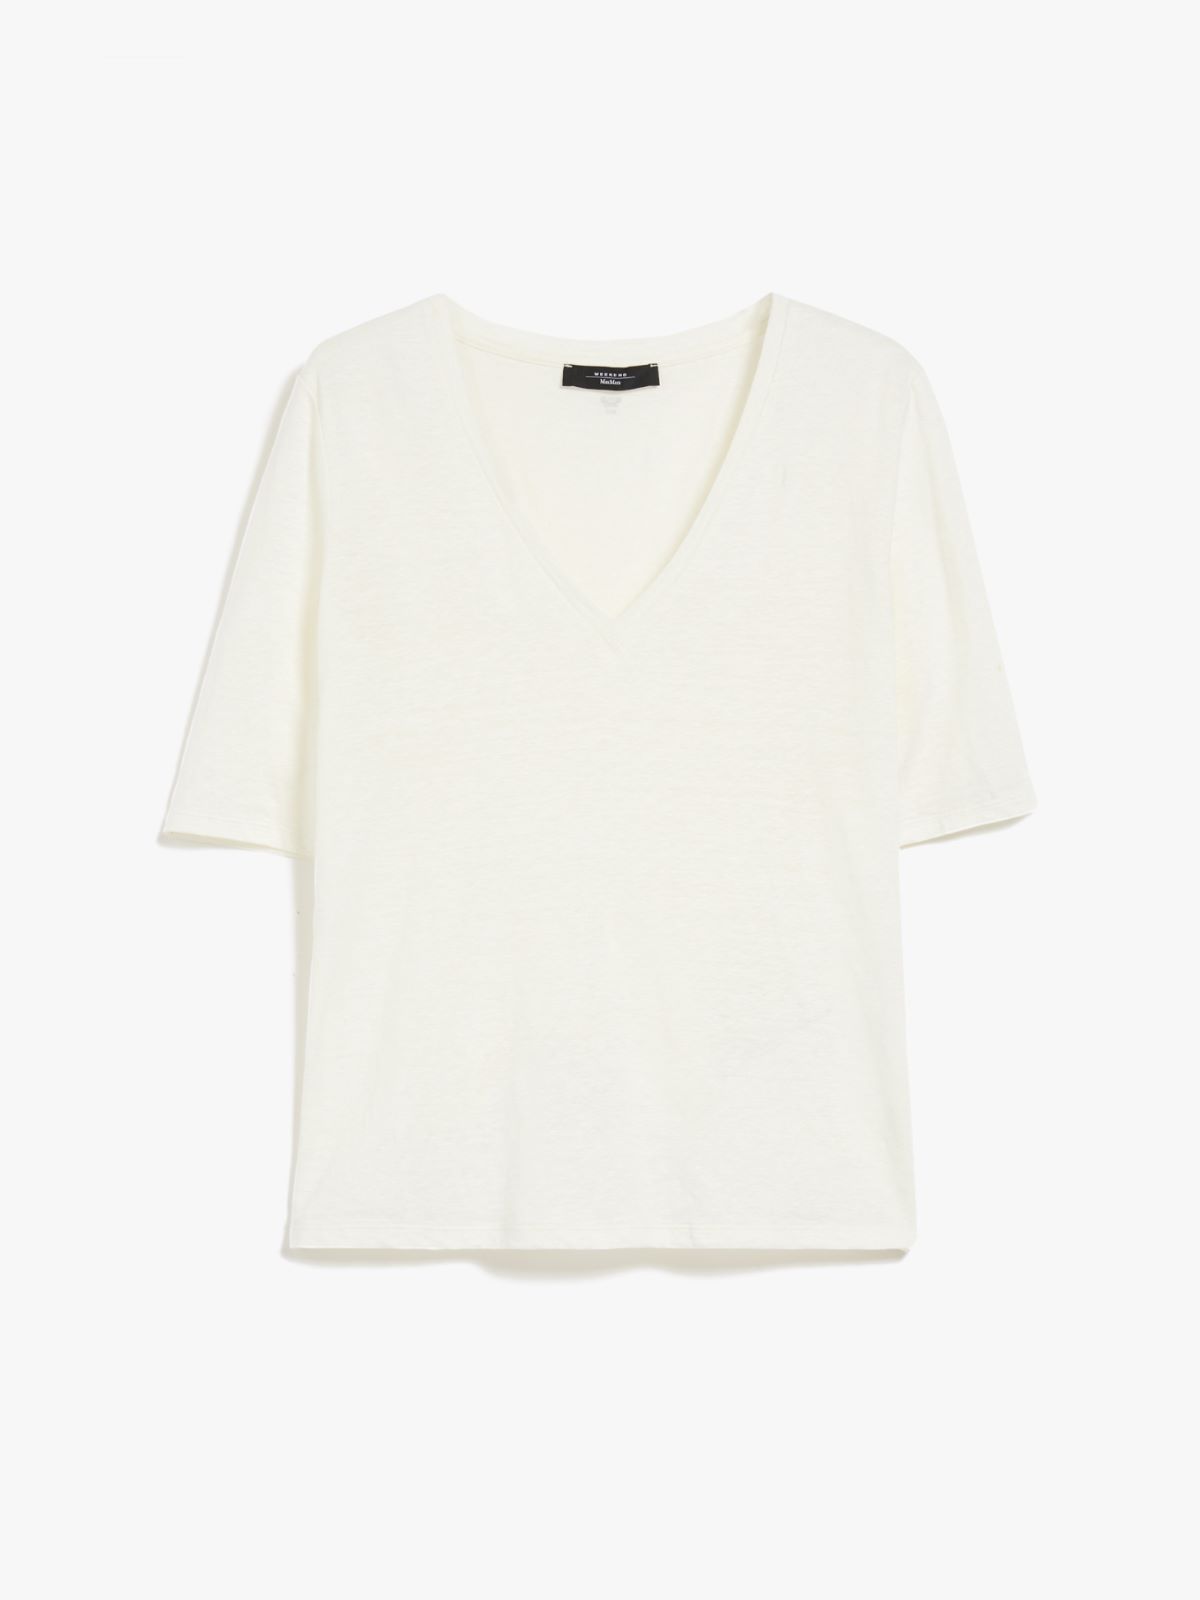 T-shirt in linen jersey - WHITE - Weekend Max Mara - 6